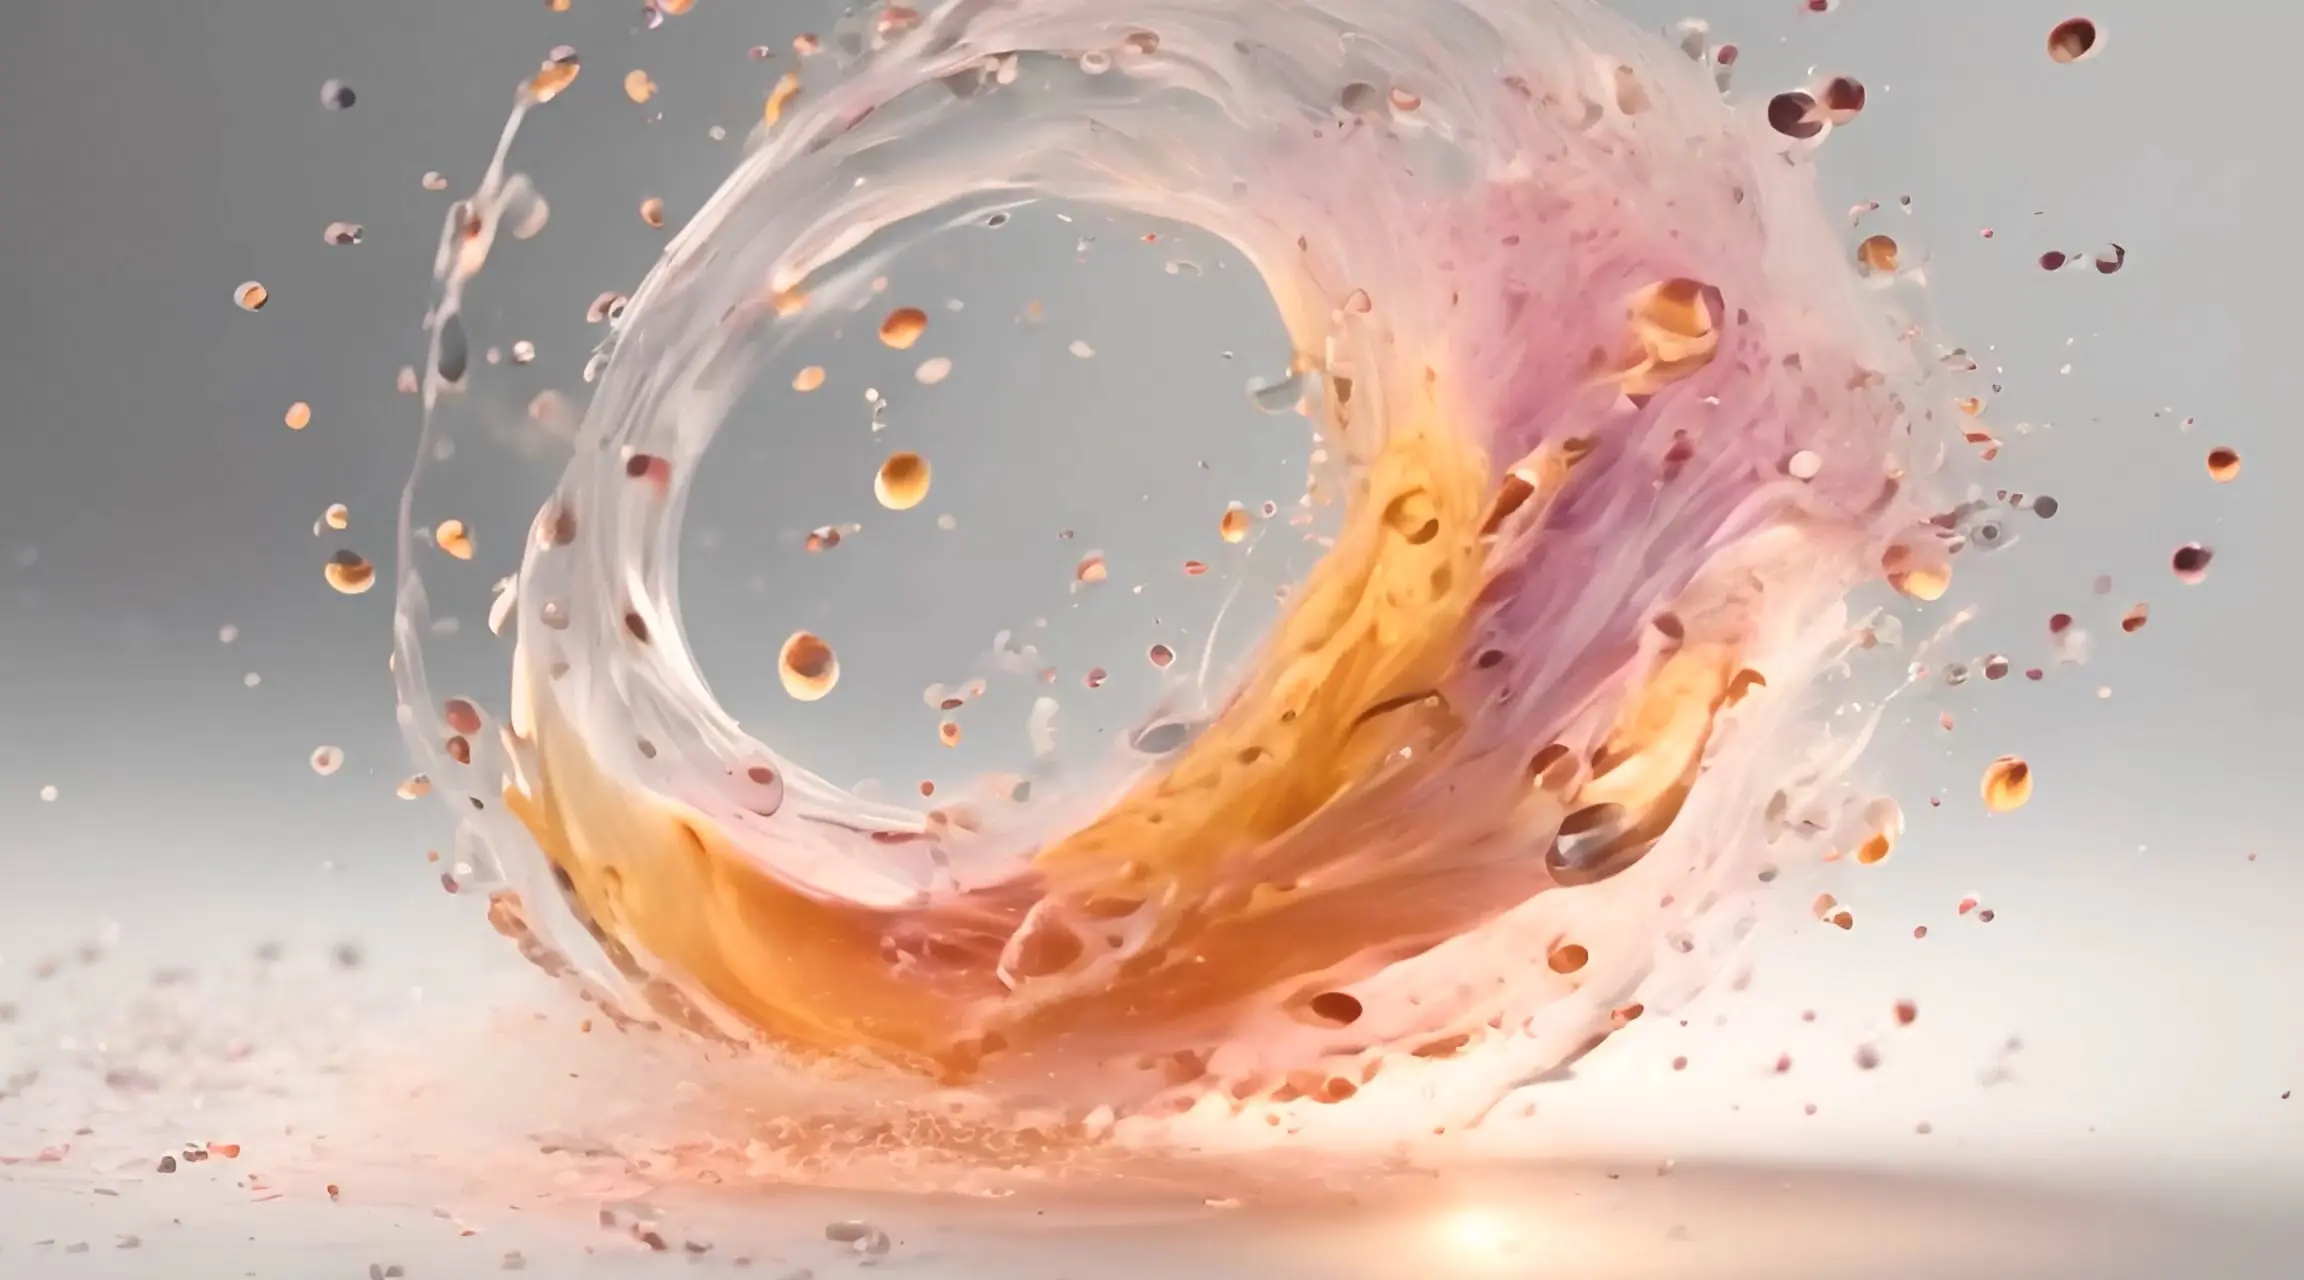 Soft Hue Vortex Serene Liquid Motion Video